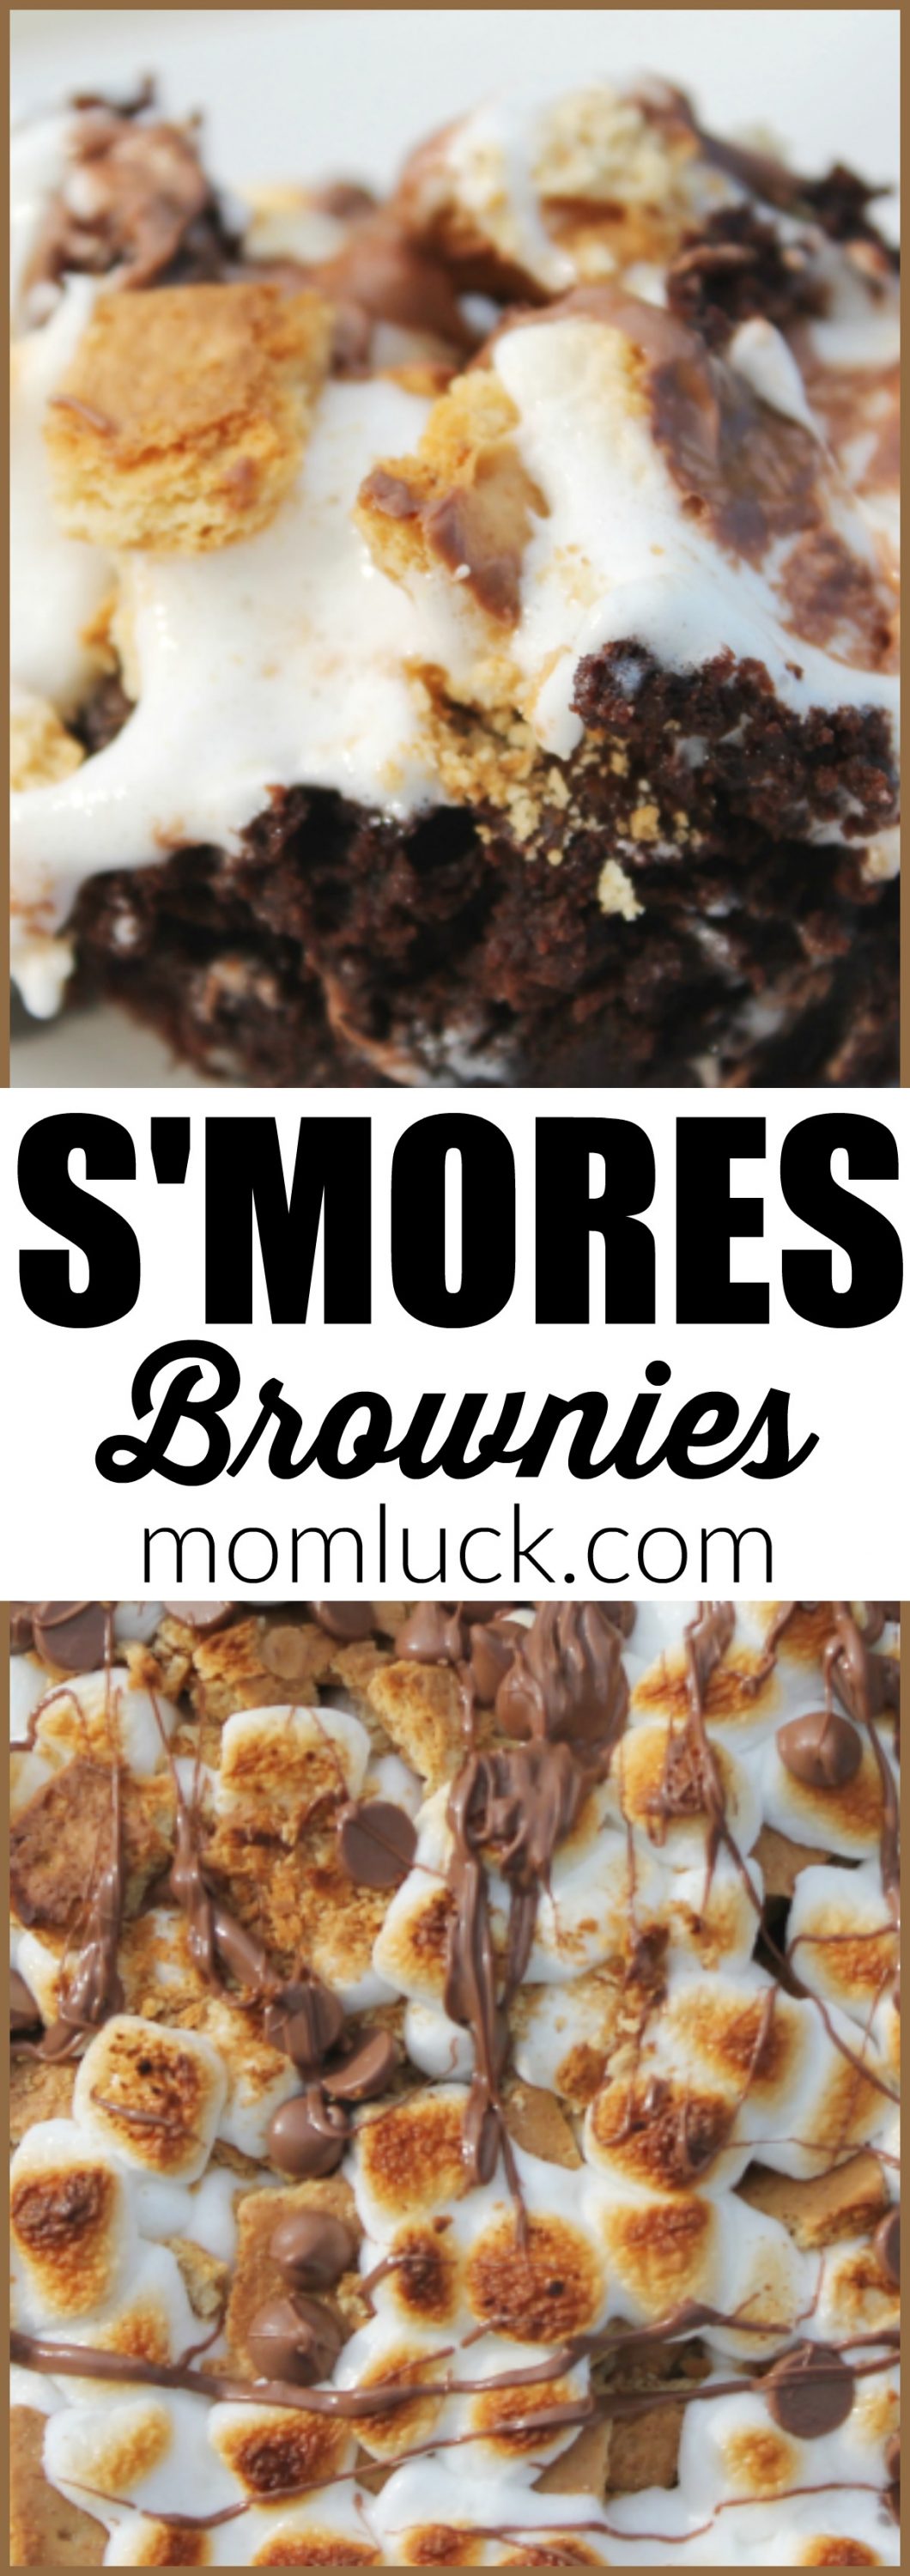 s'mores brownies recipe 